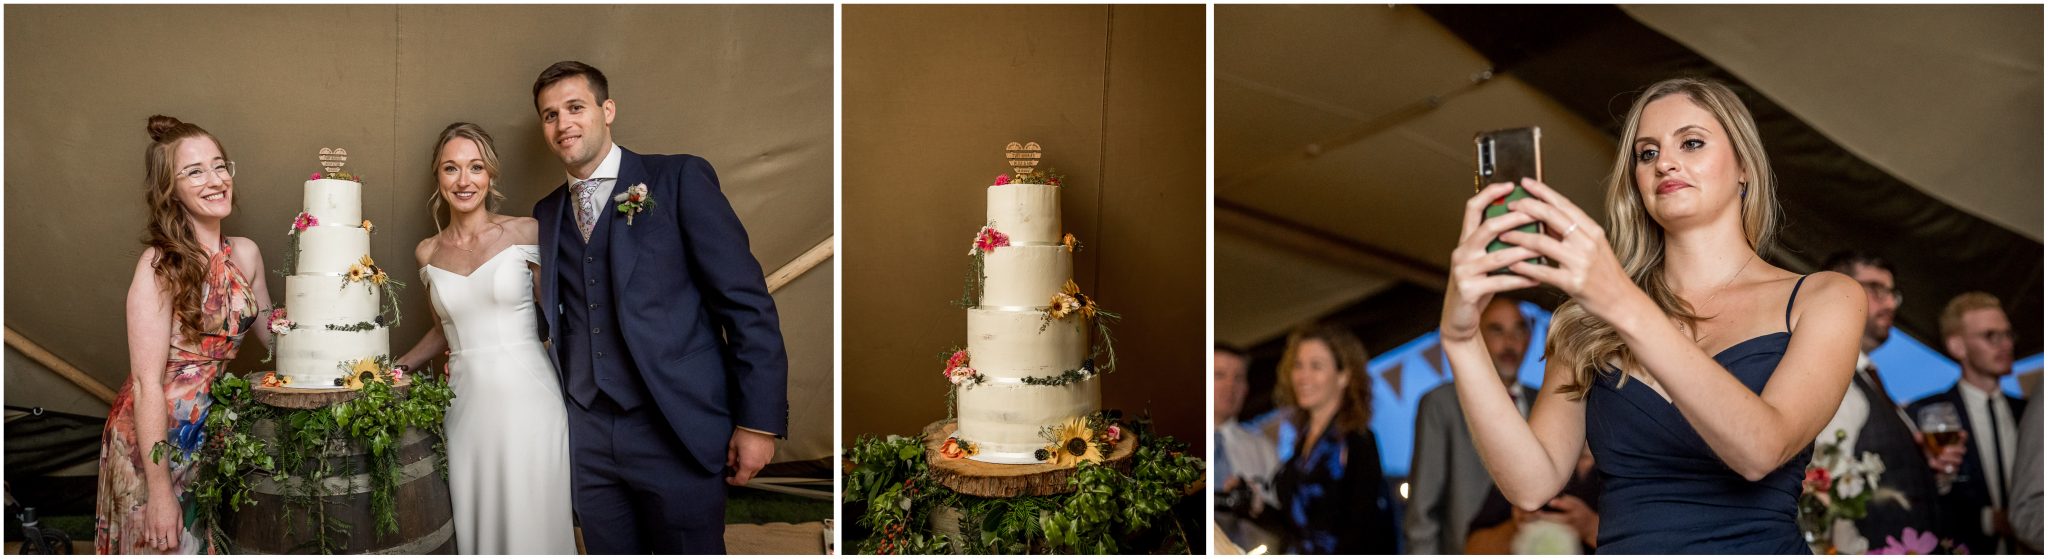 Bride and groom cut the wedding cake